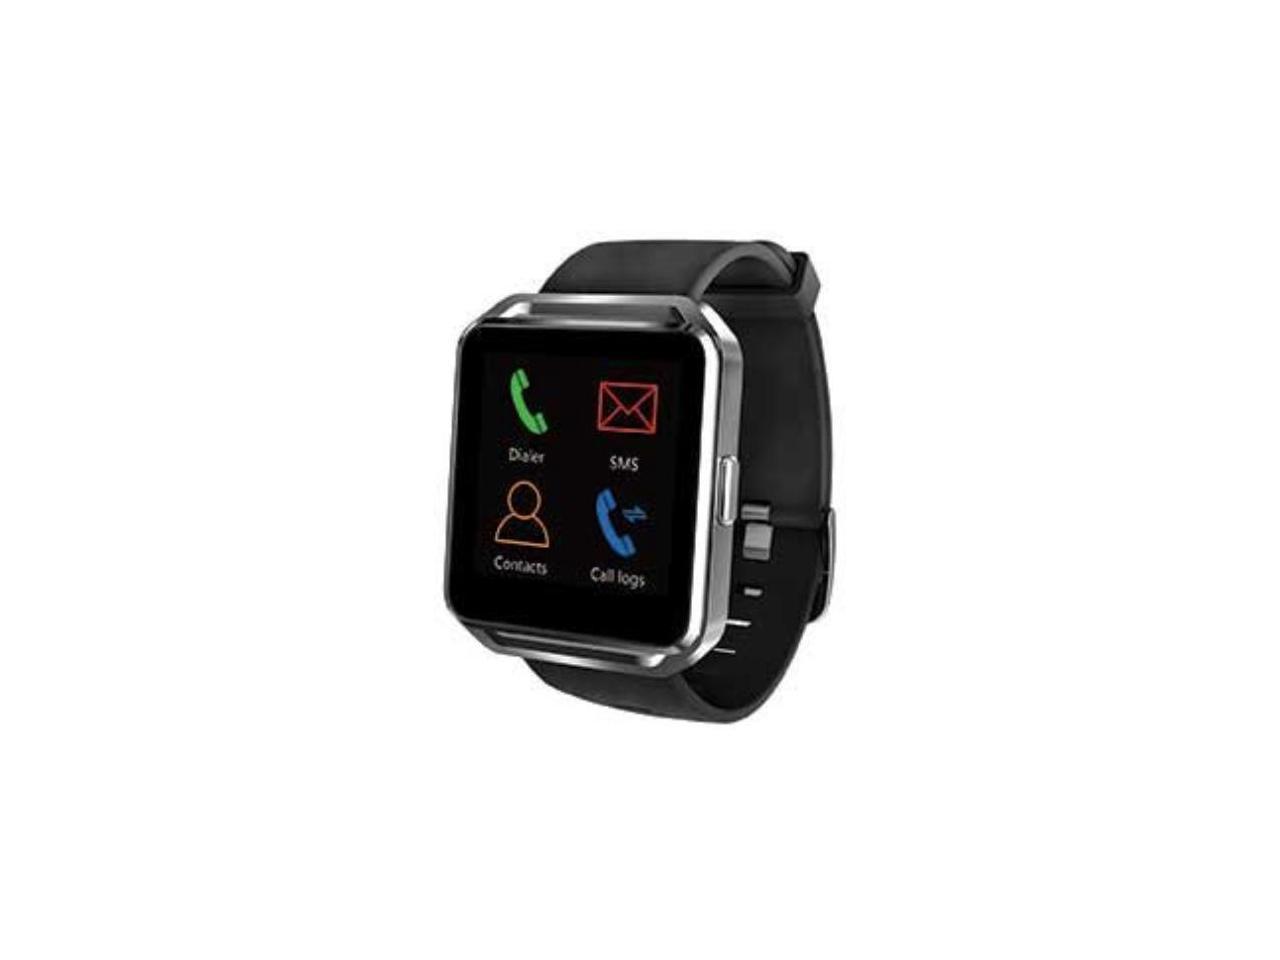 Supersonic Bluetooth Smart Watch - Newegg.com